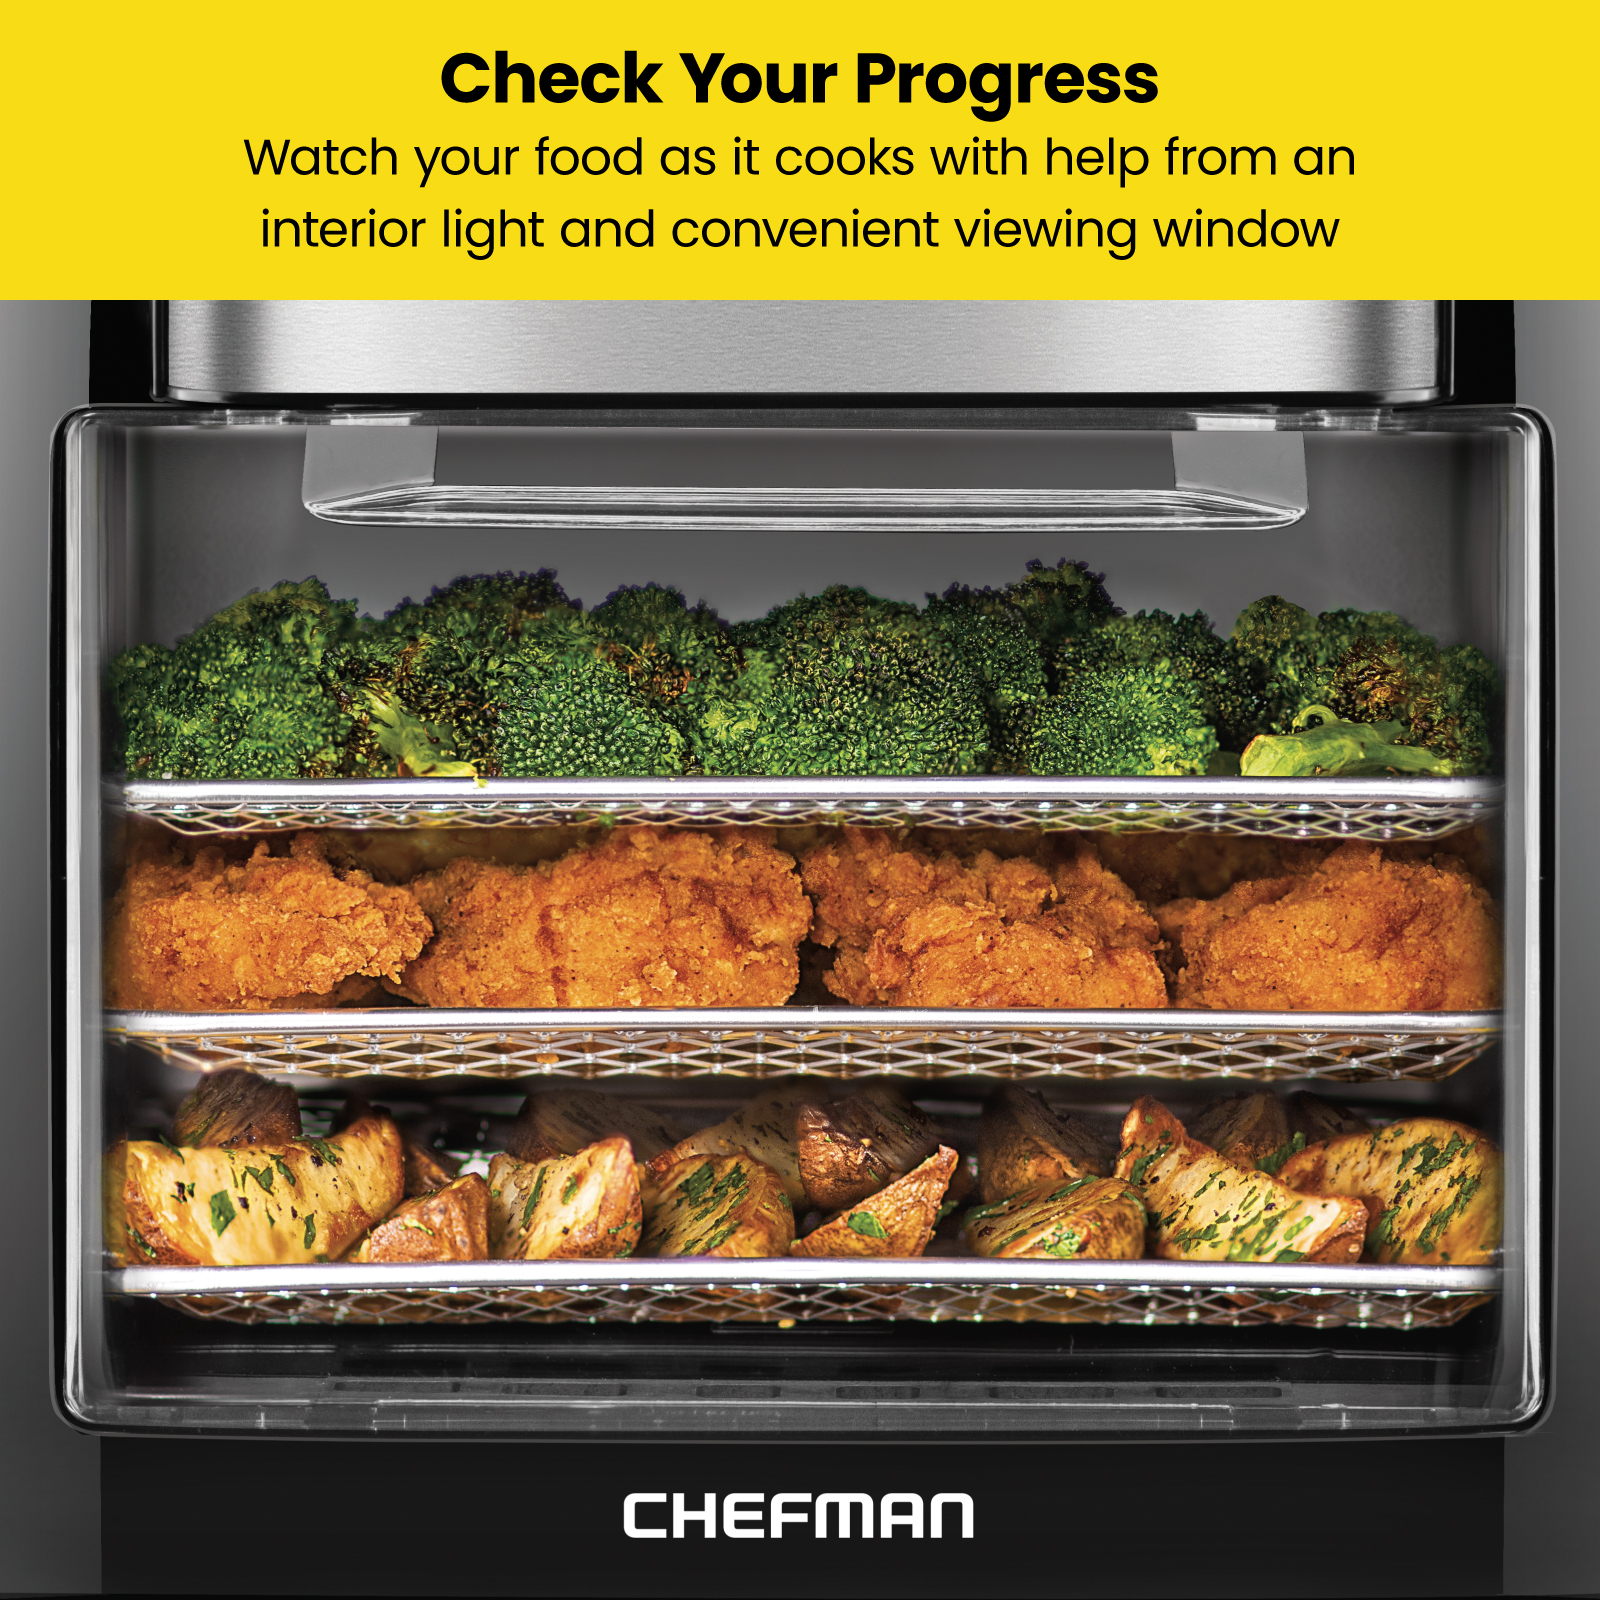 Chefman Multifunctional Digital 10 Qt. Air Fryer+ Rotisserie, Fry, Roast & Bake, 17 Presets - Black, New - image 8 of 12